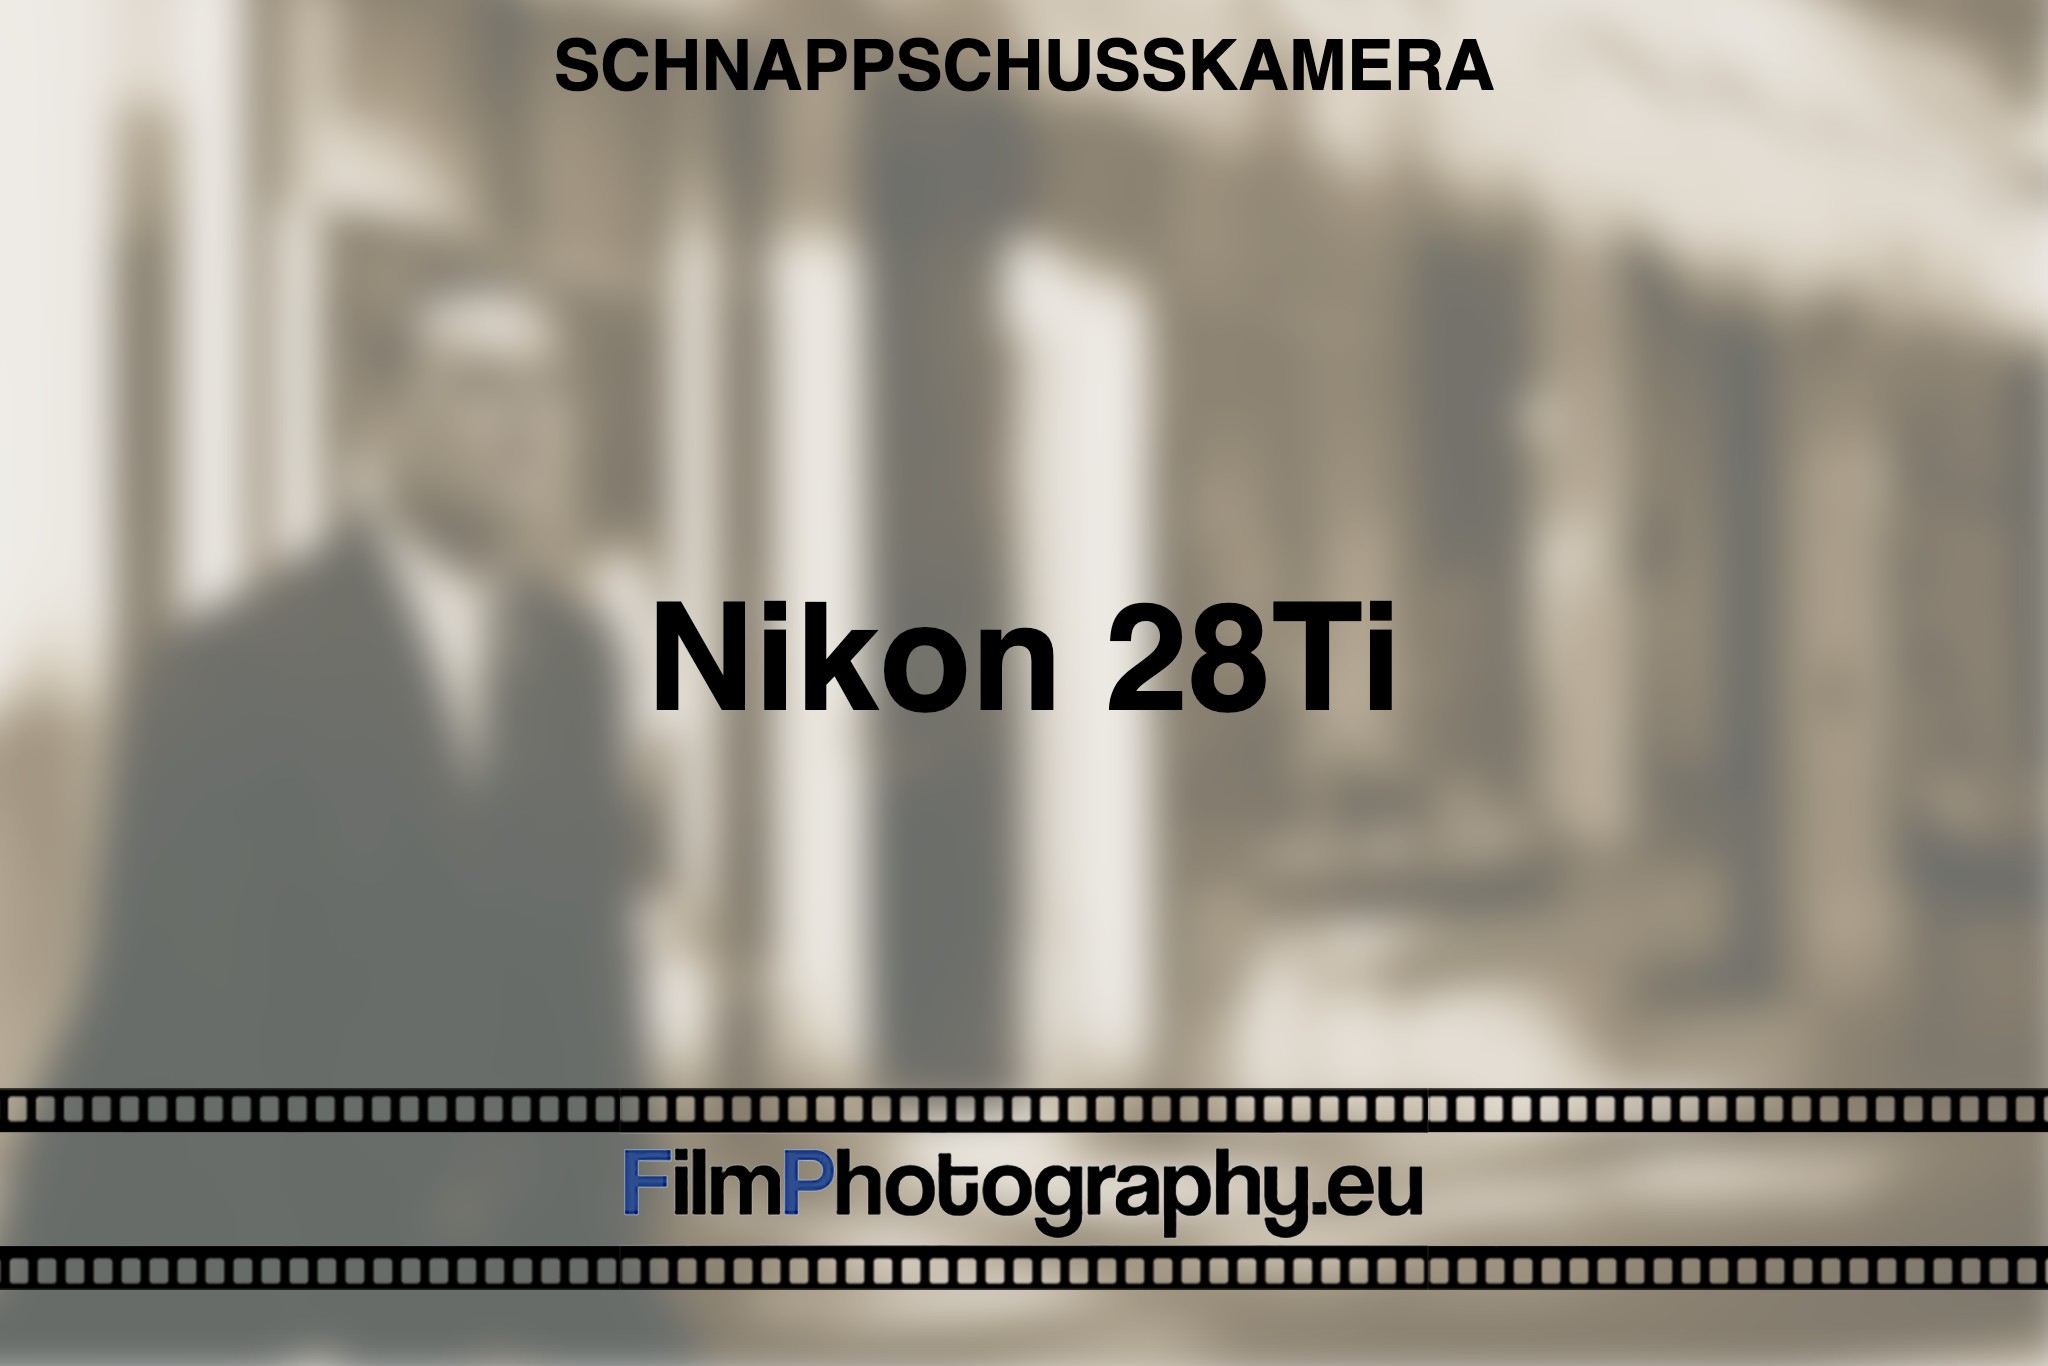 nikon-28ti-schnappschusskamera-bnv